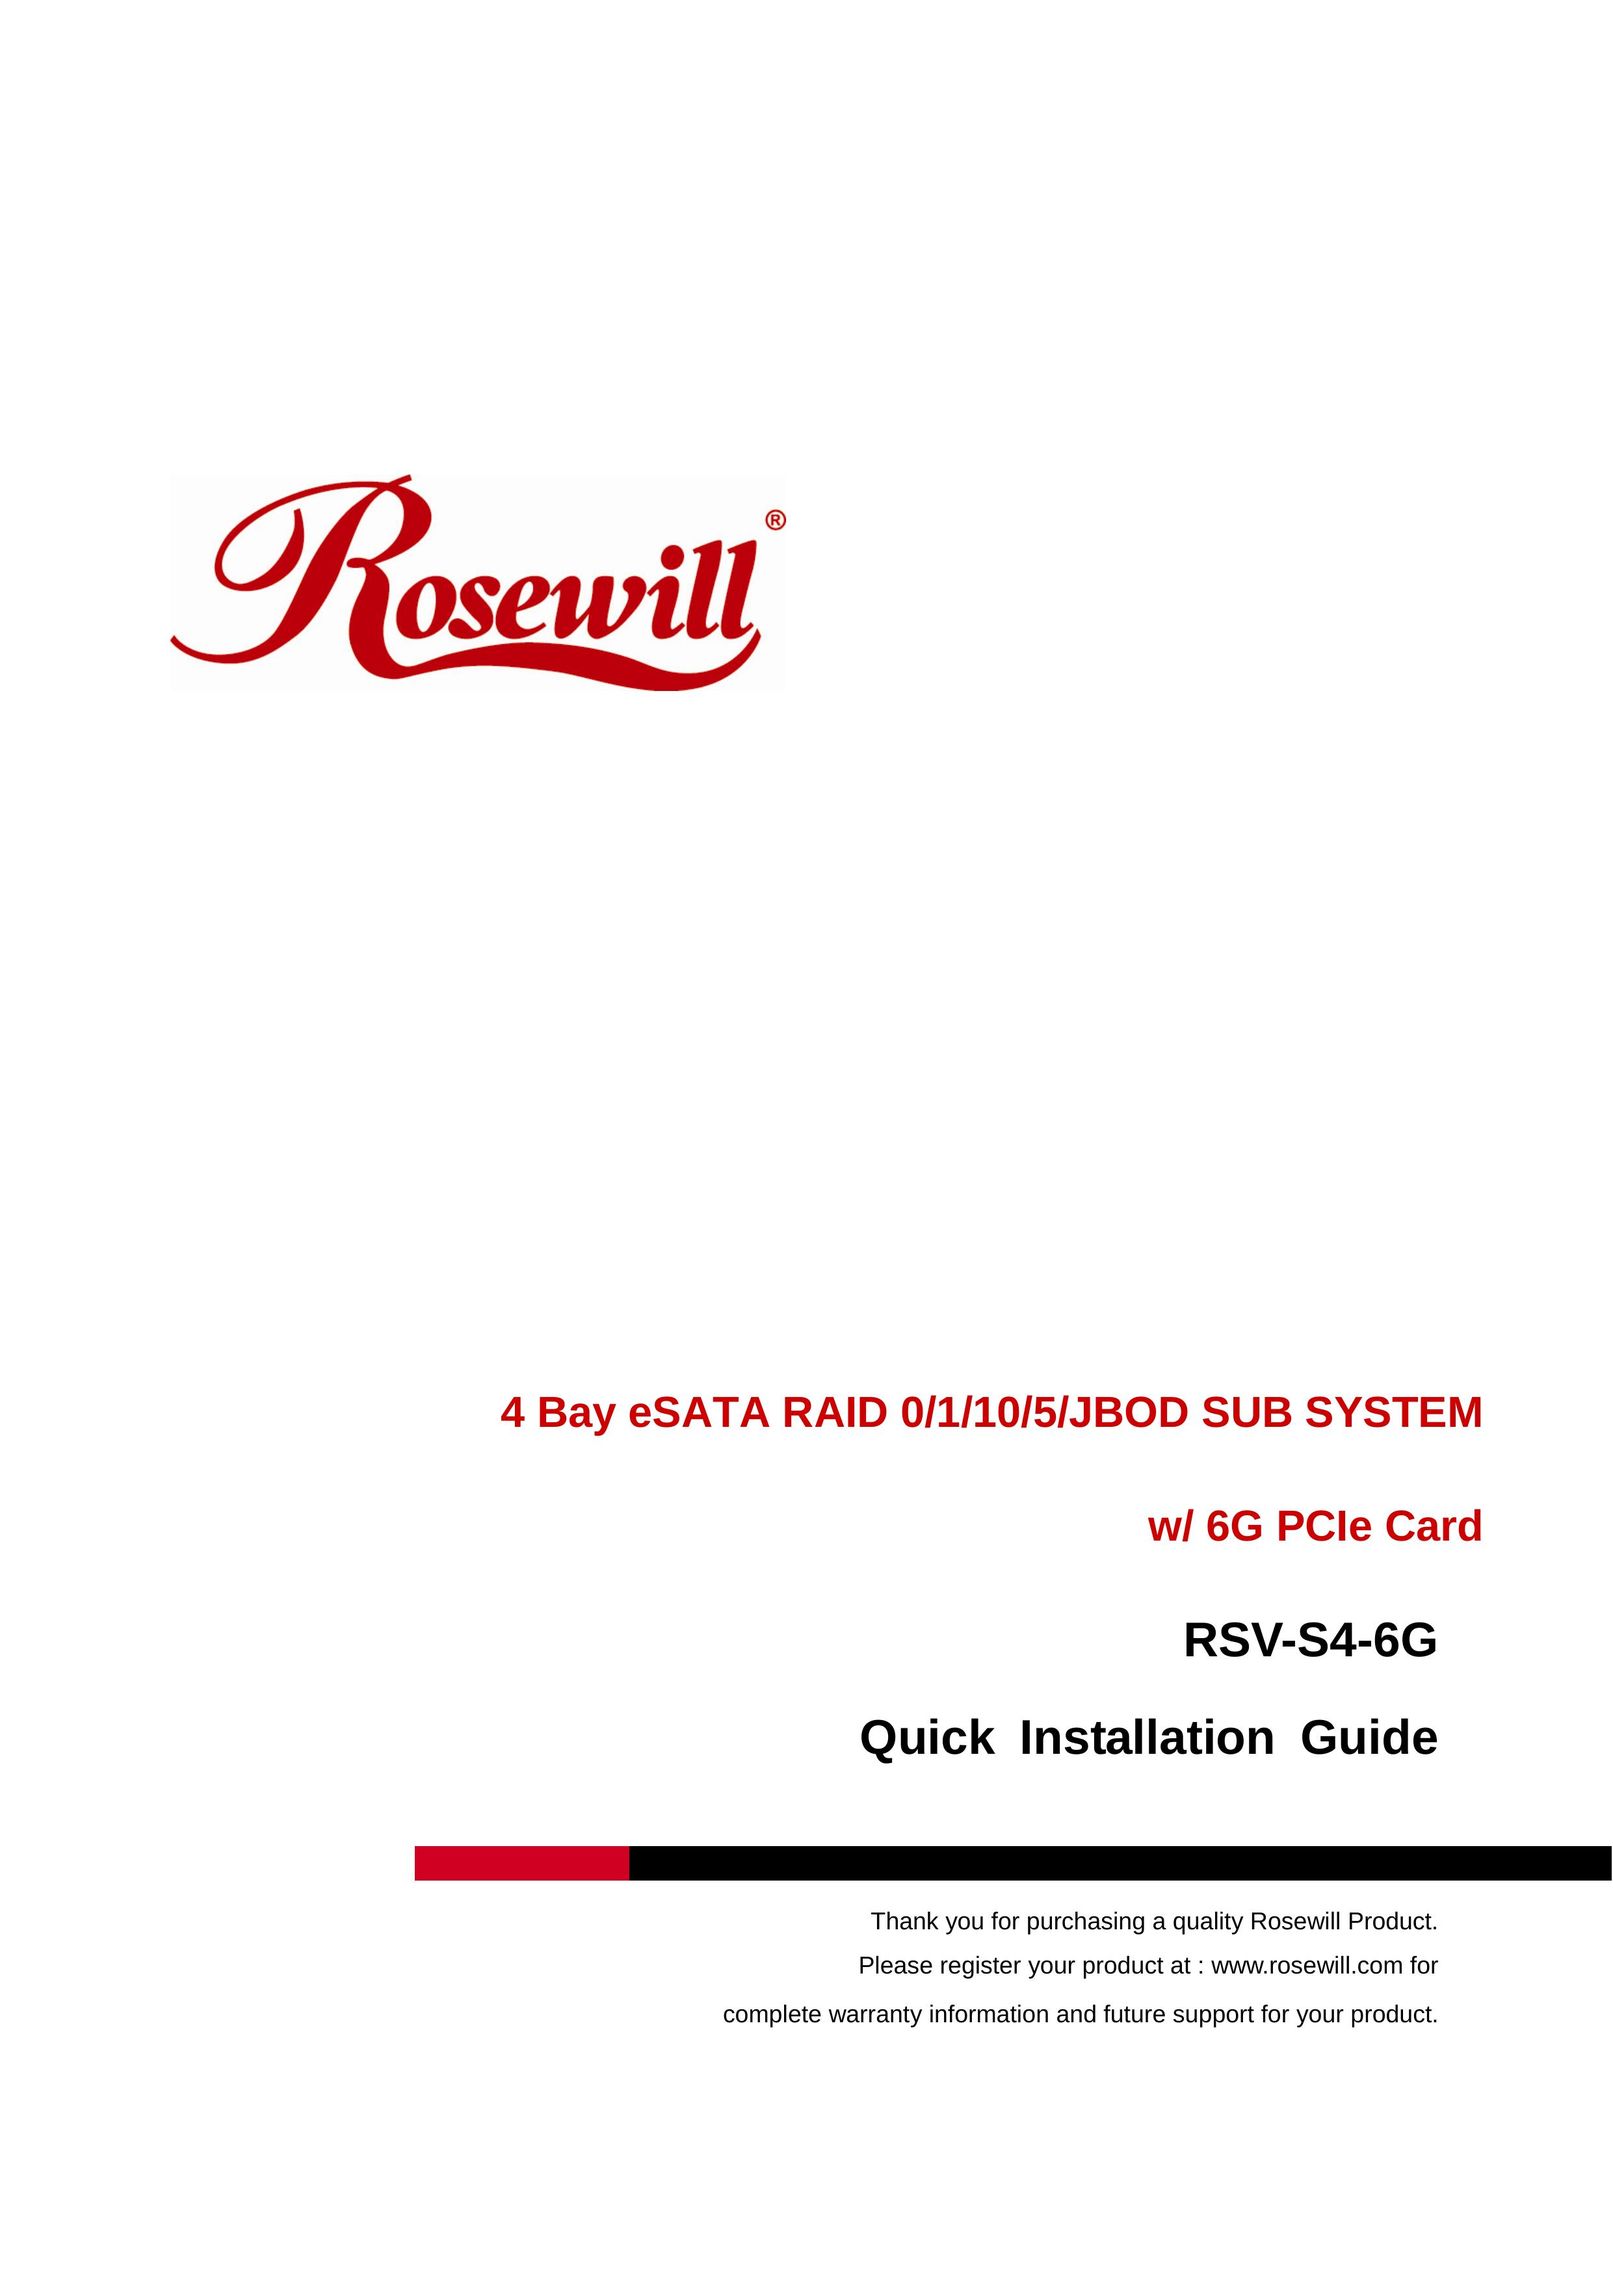 Rosewill RSV-S4-6G Car Speaker User Manual